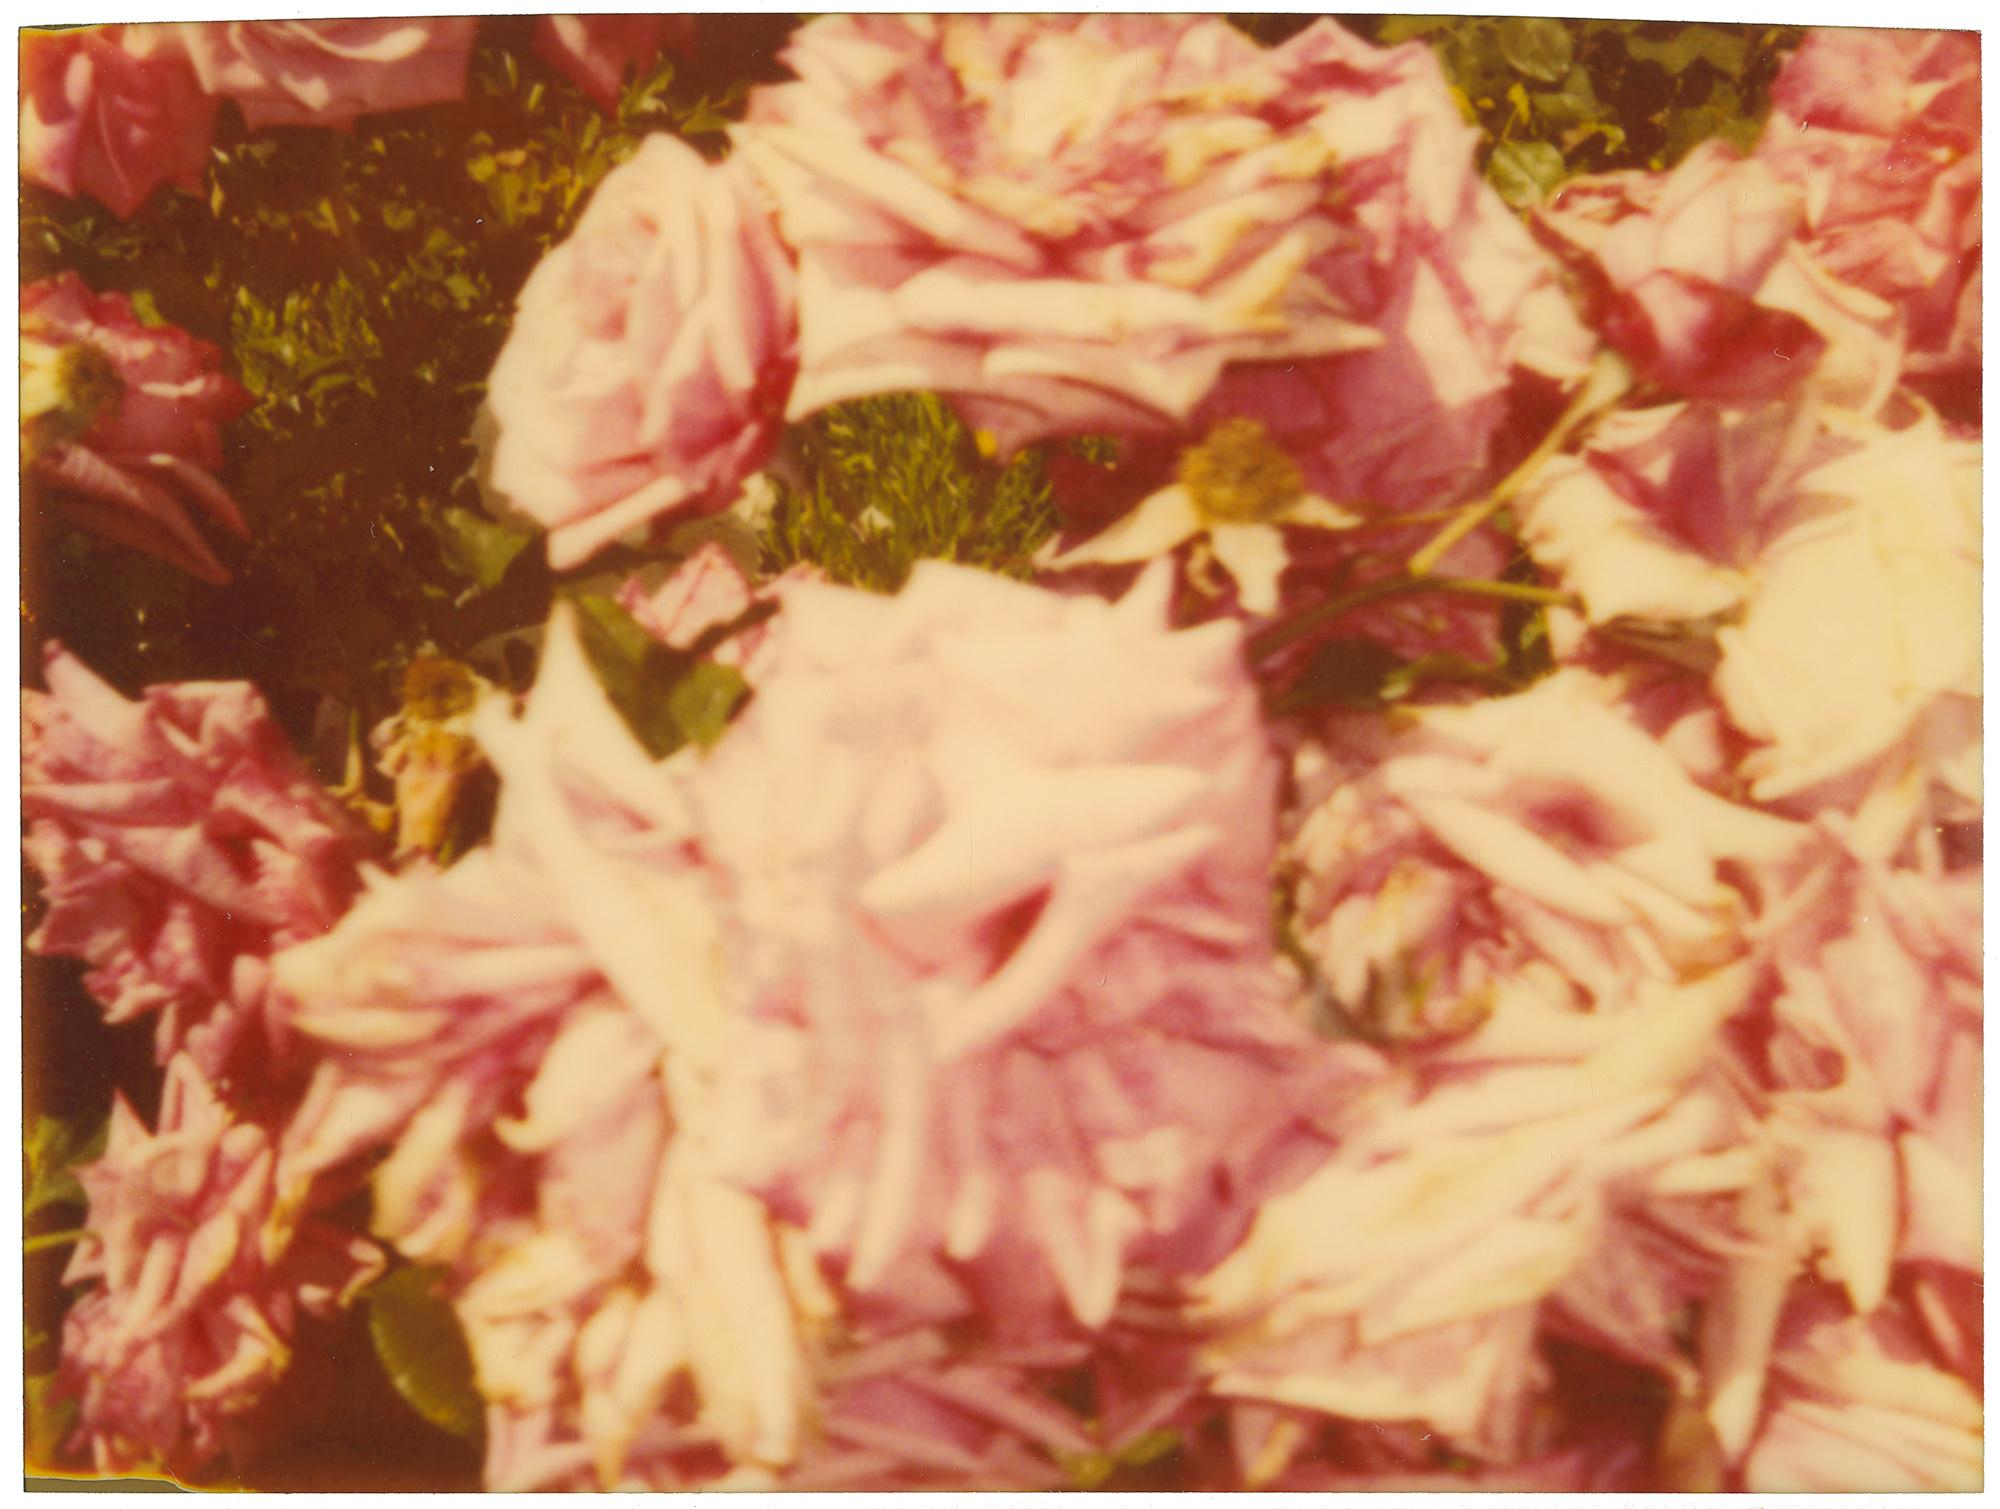 Rosegarden #01 (Suburbia), diptych - 21st Century, Contemporary, Color, Polaroid - Photograph by Stefanie Schneider